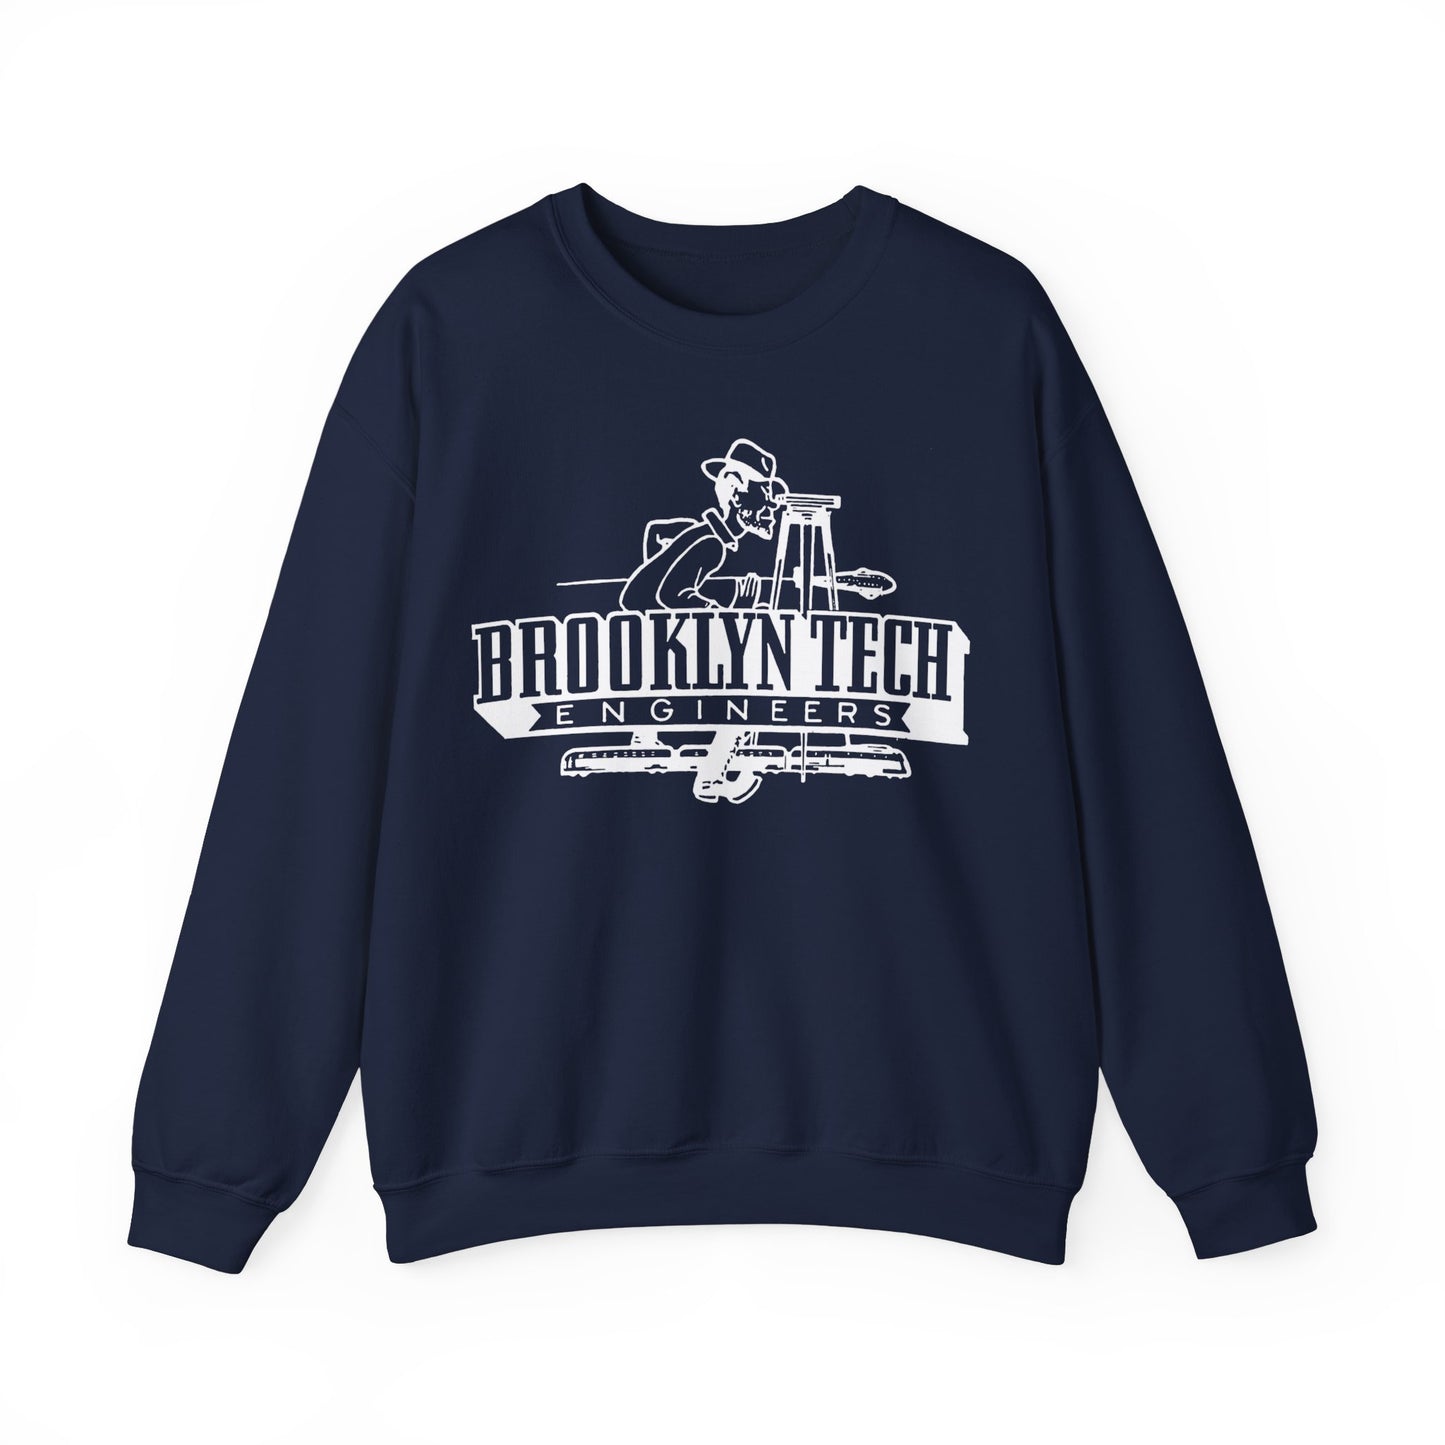 Vintage - Joe Engineer -  Men's Heavy Blend Crewneck Sweatshirt